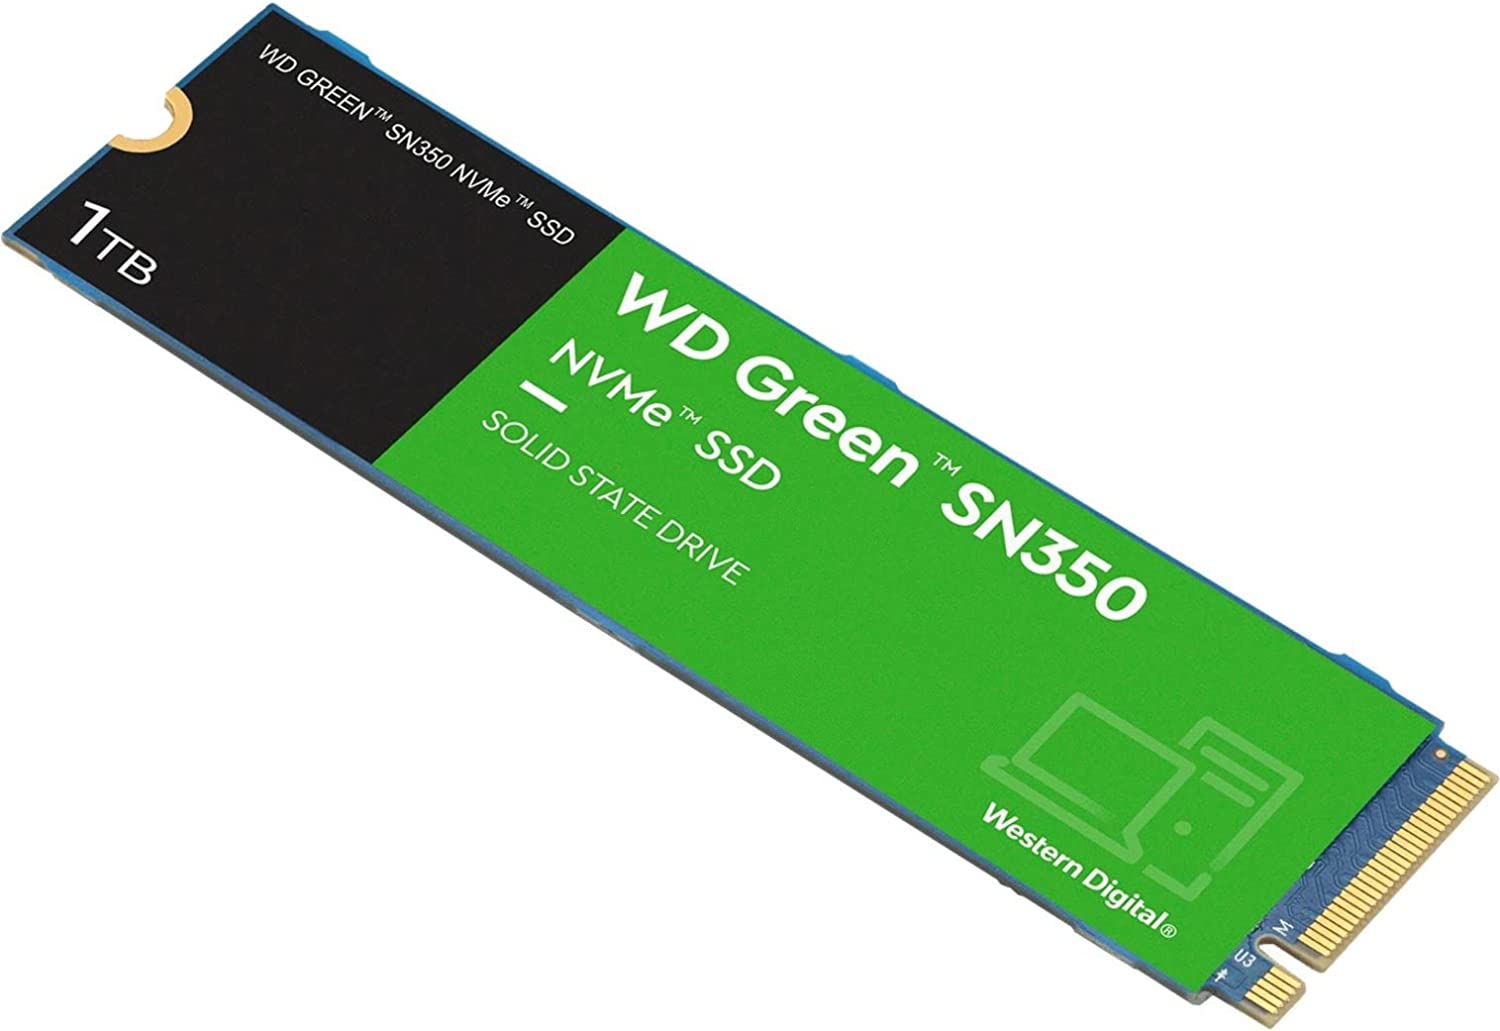 Western Digital 1TB WD Green SN350 NVMe Internal SSD Solid State Drive - Gen3 PCIe, QLC, M.2 2280 $39.99